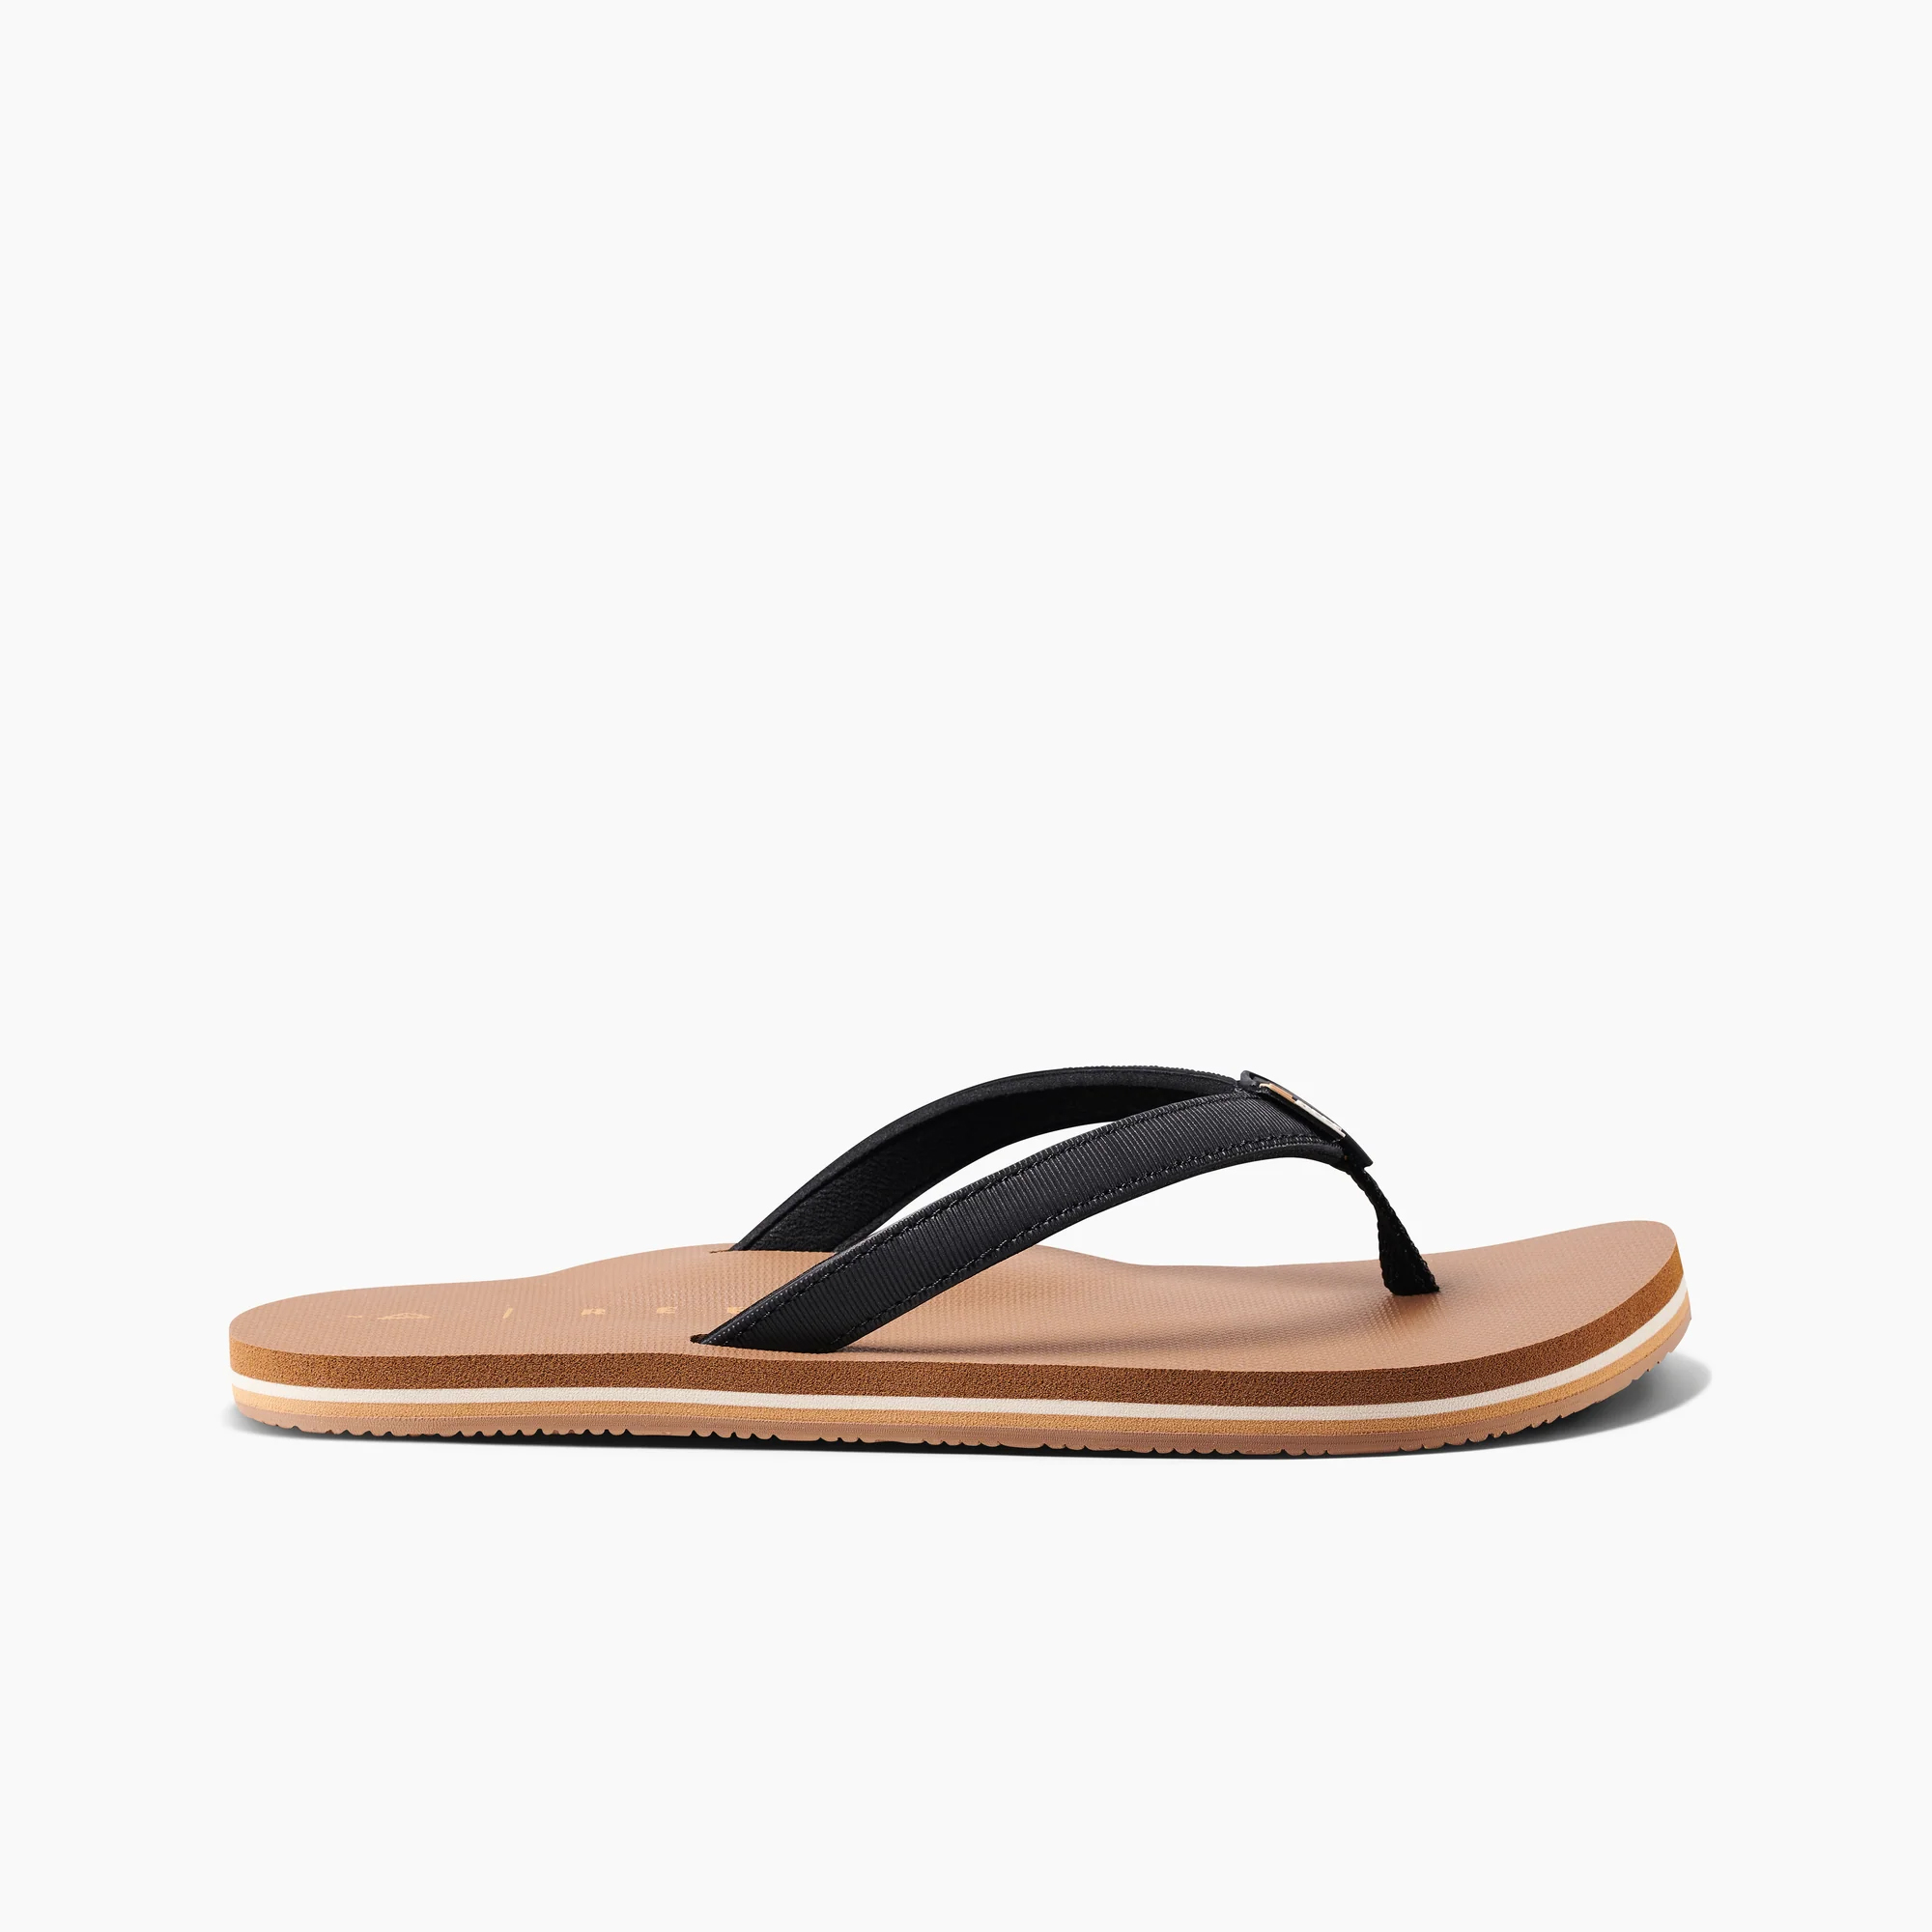 Supportive beach sandal